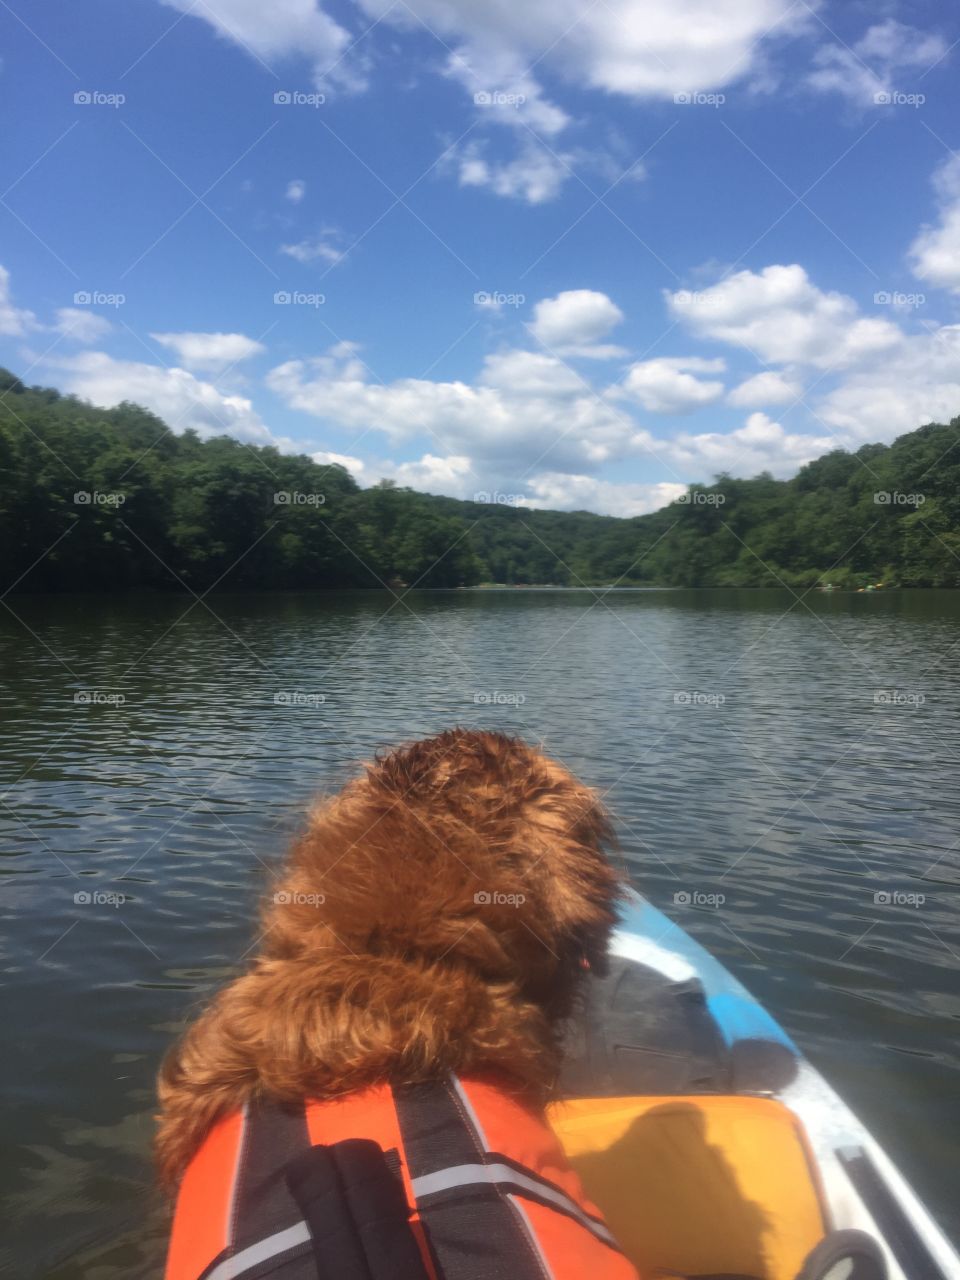 A pup and a kayak